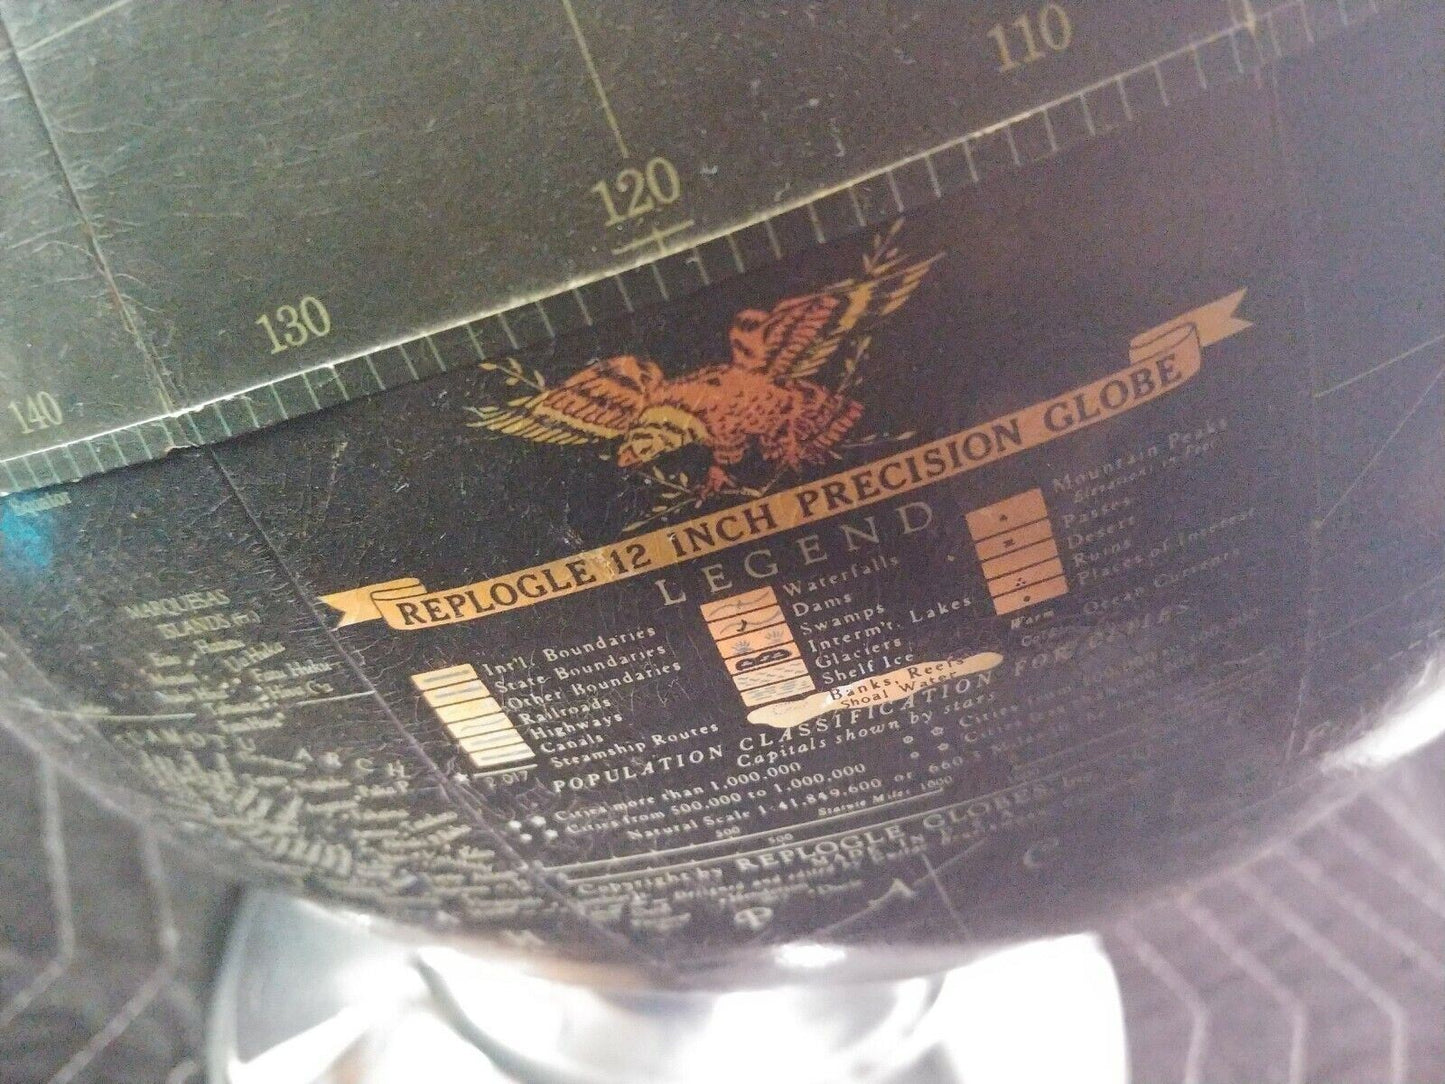 Replogle Vintage Black 12" Precision Globe w/ Silver Base - Made in USA